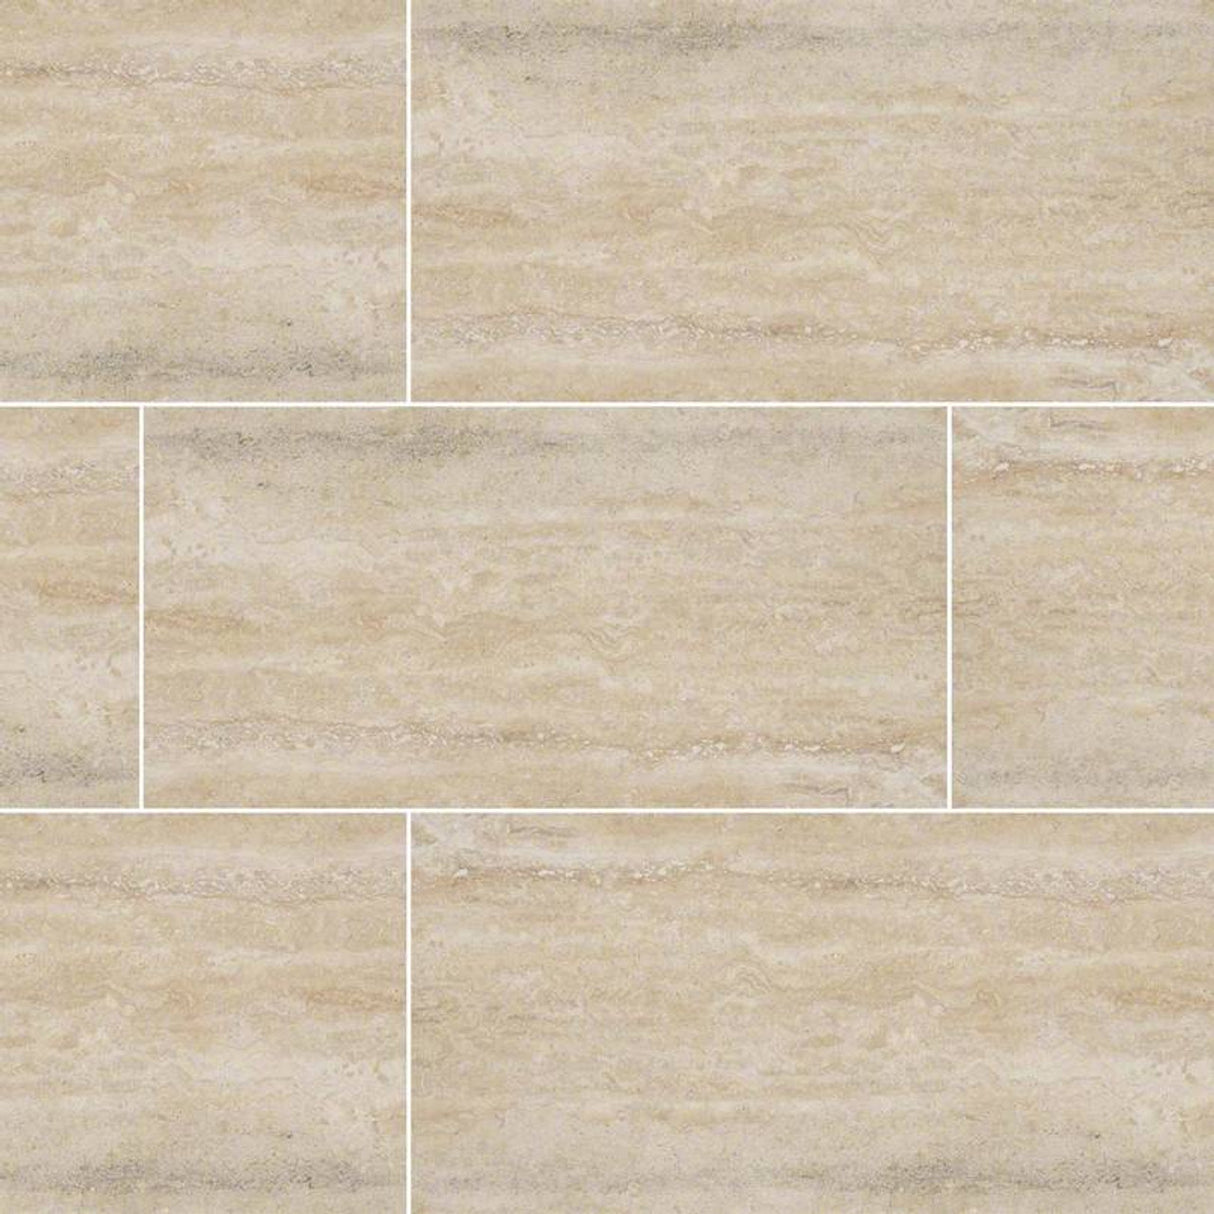 Veneto Sand 12"x24" Polished Porcelain Floor and Wall Tile- MSI Collection VENETO SAND POLISHED 12X24 (Case)